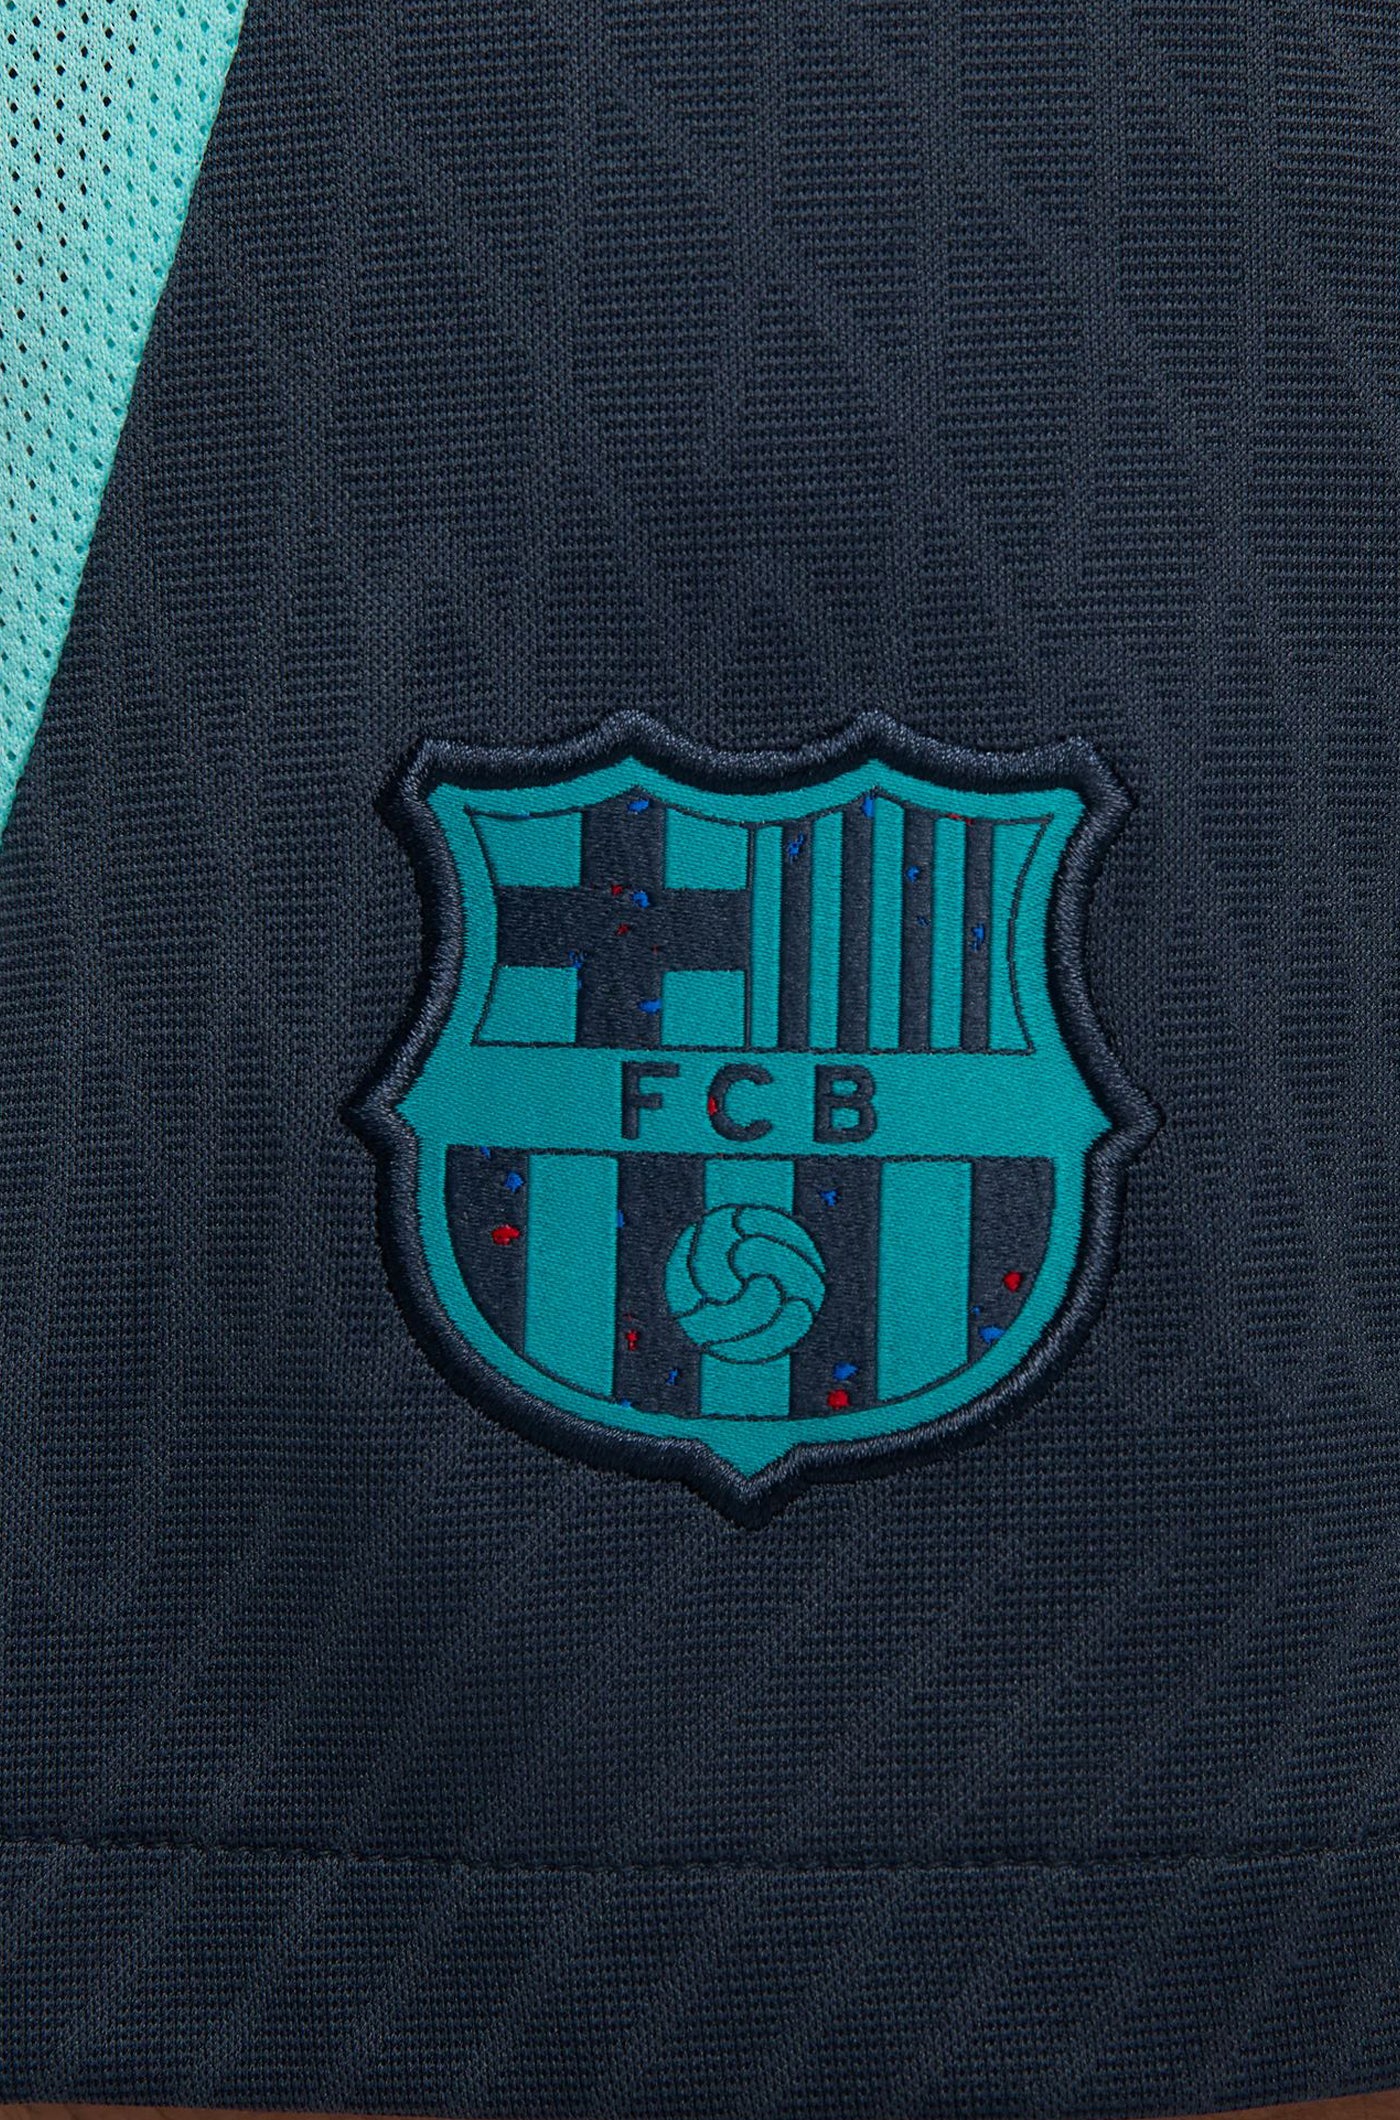 FC Barcelona Training Shorts 23/24